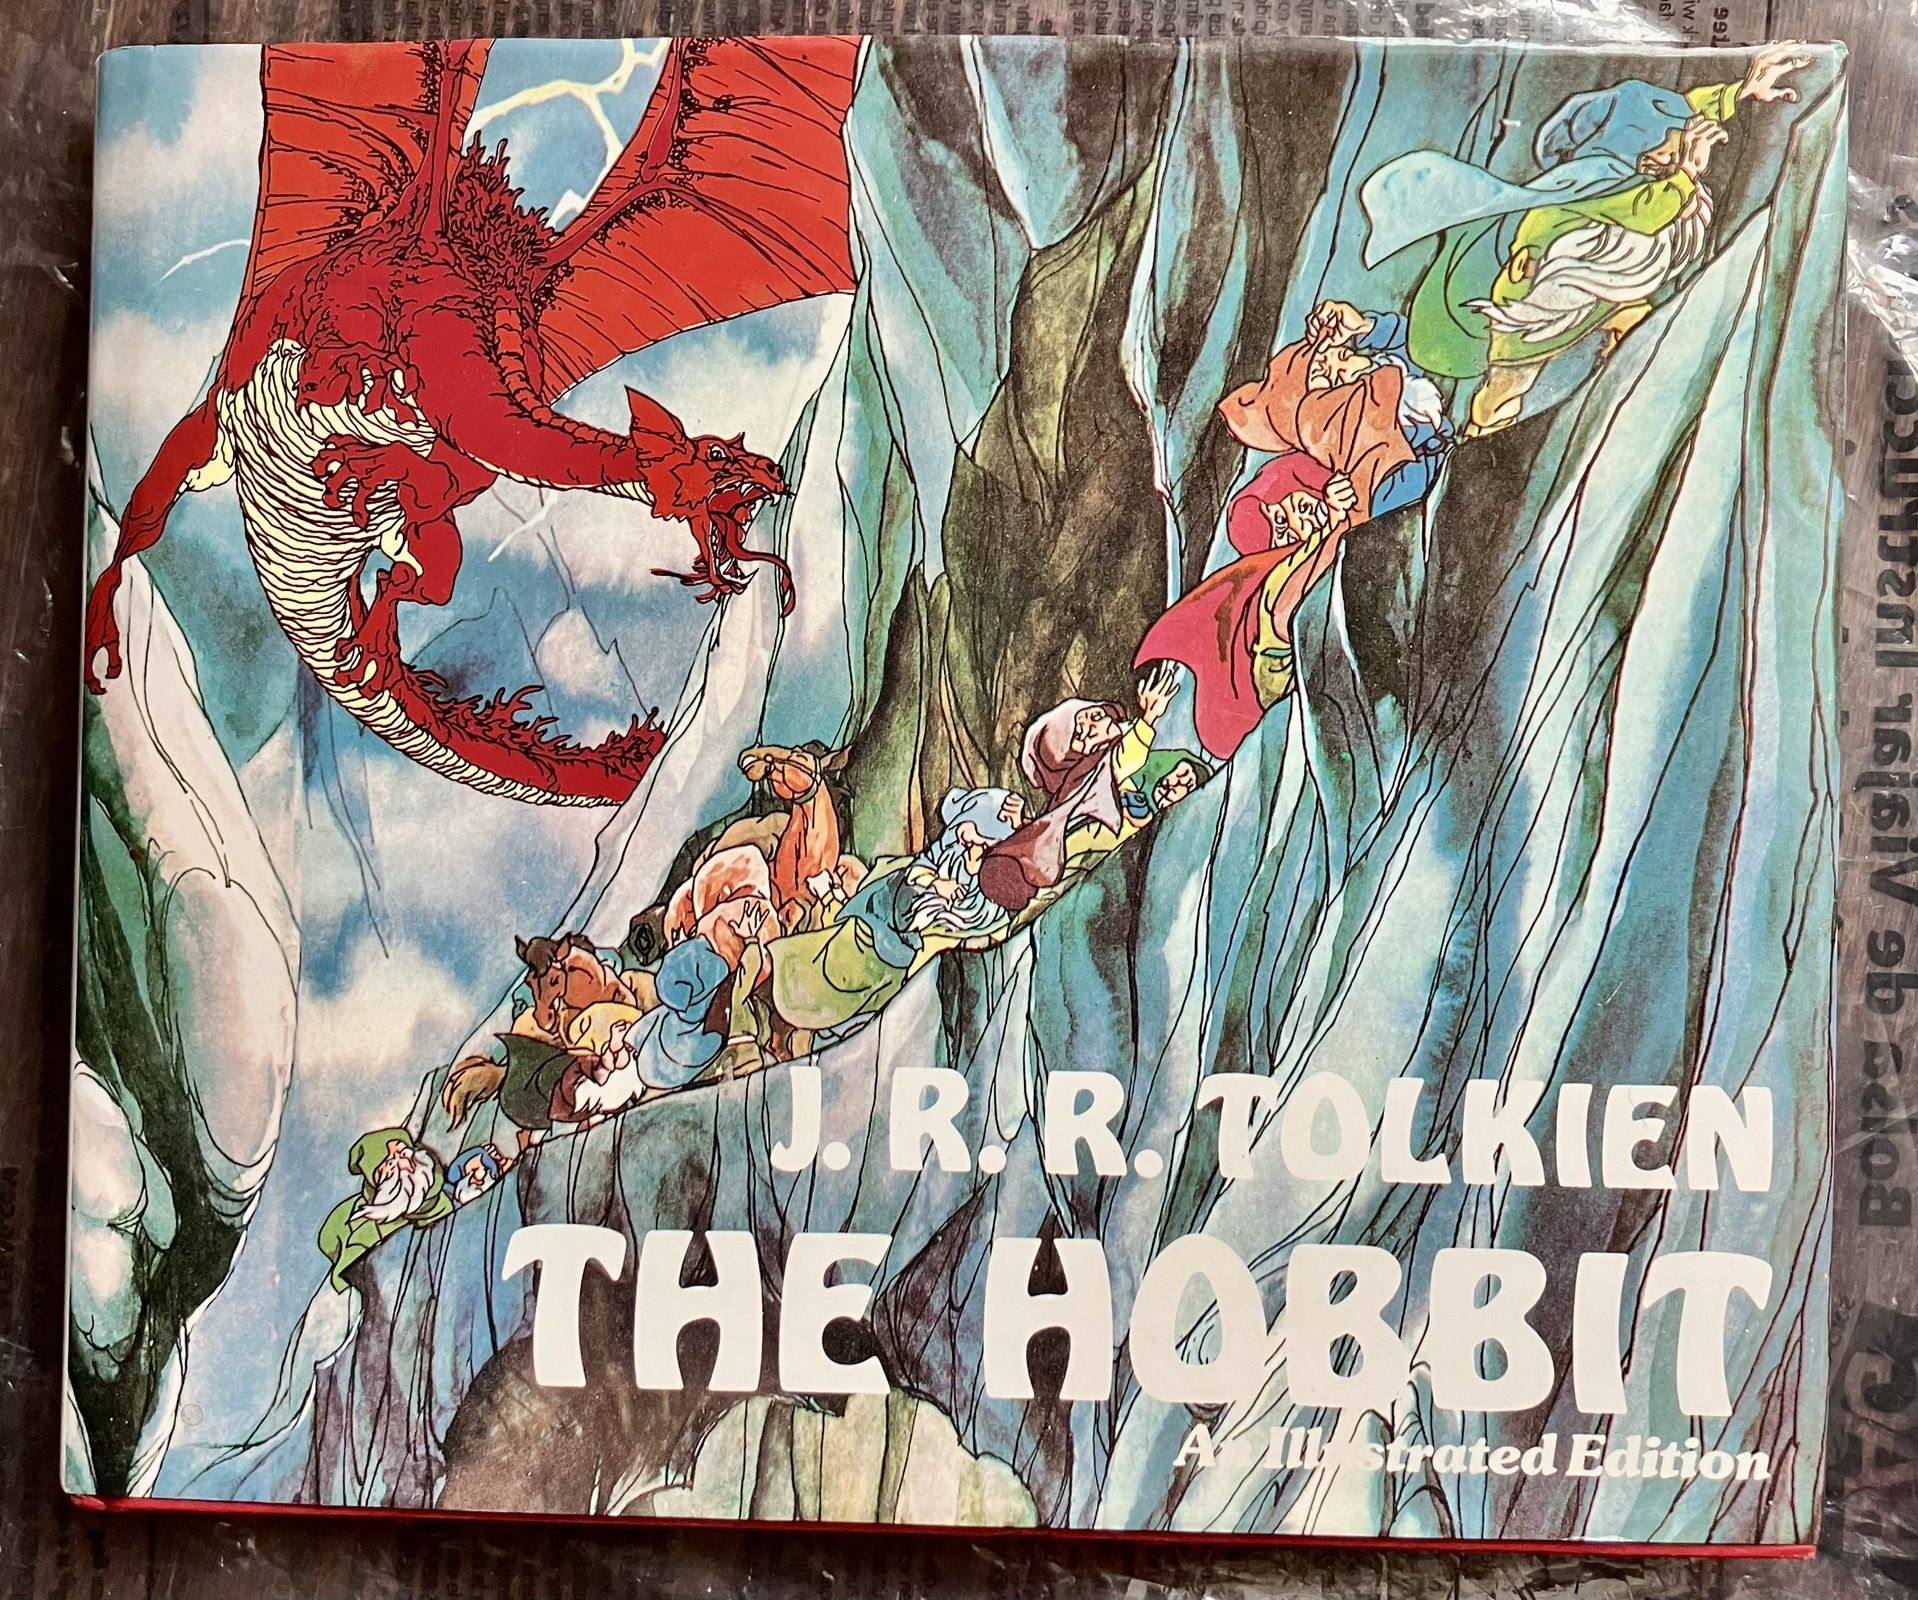  The Hobbit: An Illustrated Edition (Galahad Books, 1993)